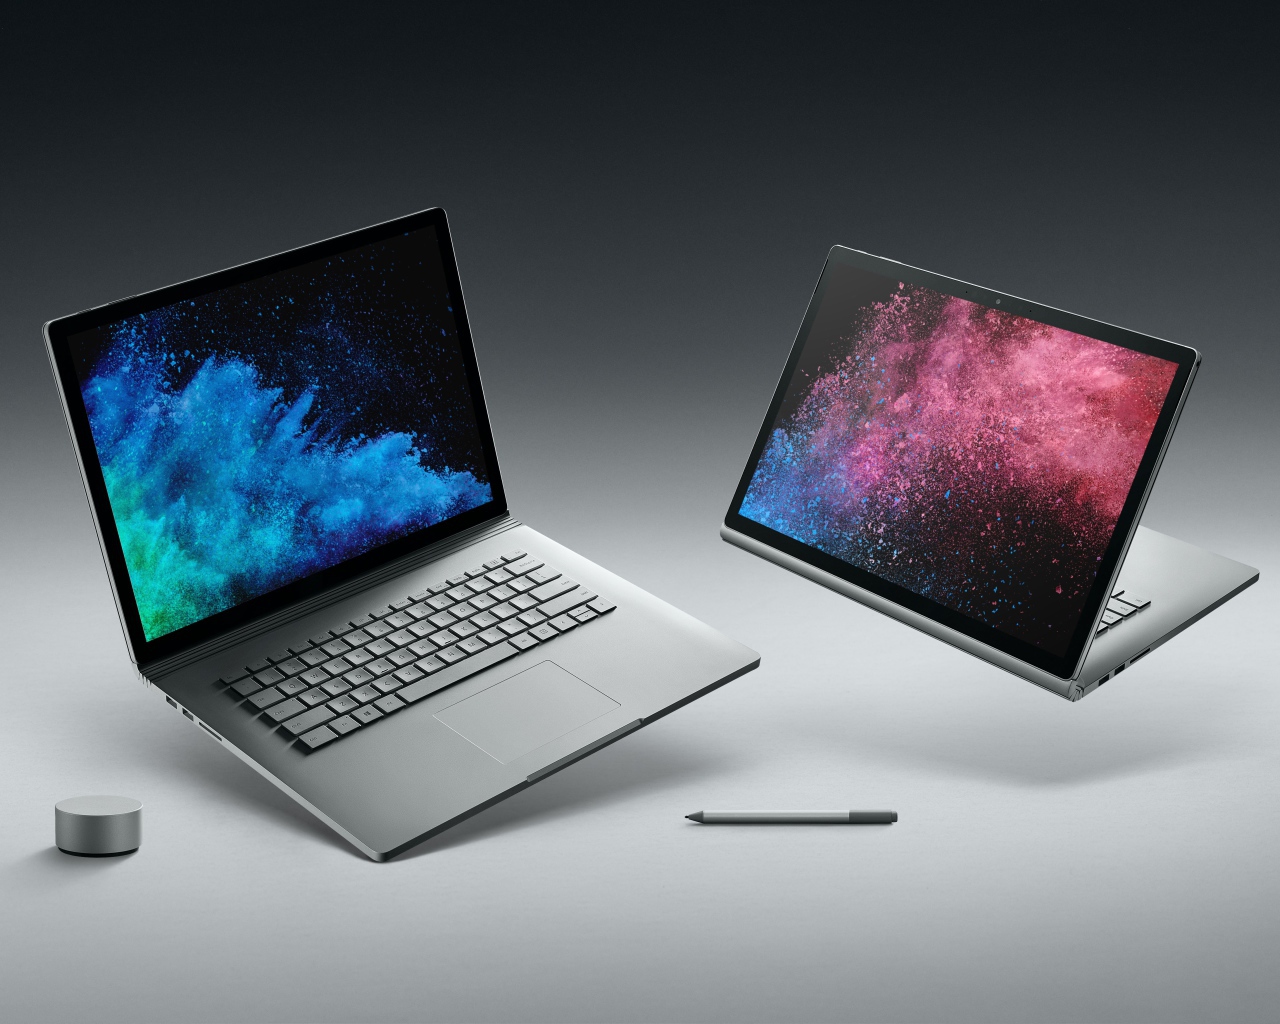 Stylish laptops Microsoft Surface Book 2, 2017 on a gray background